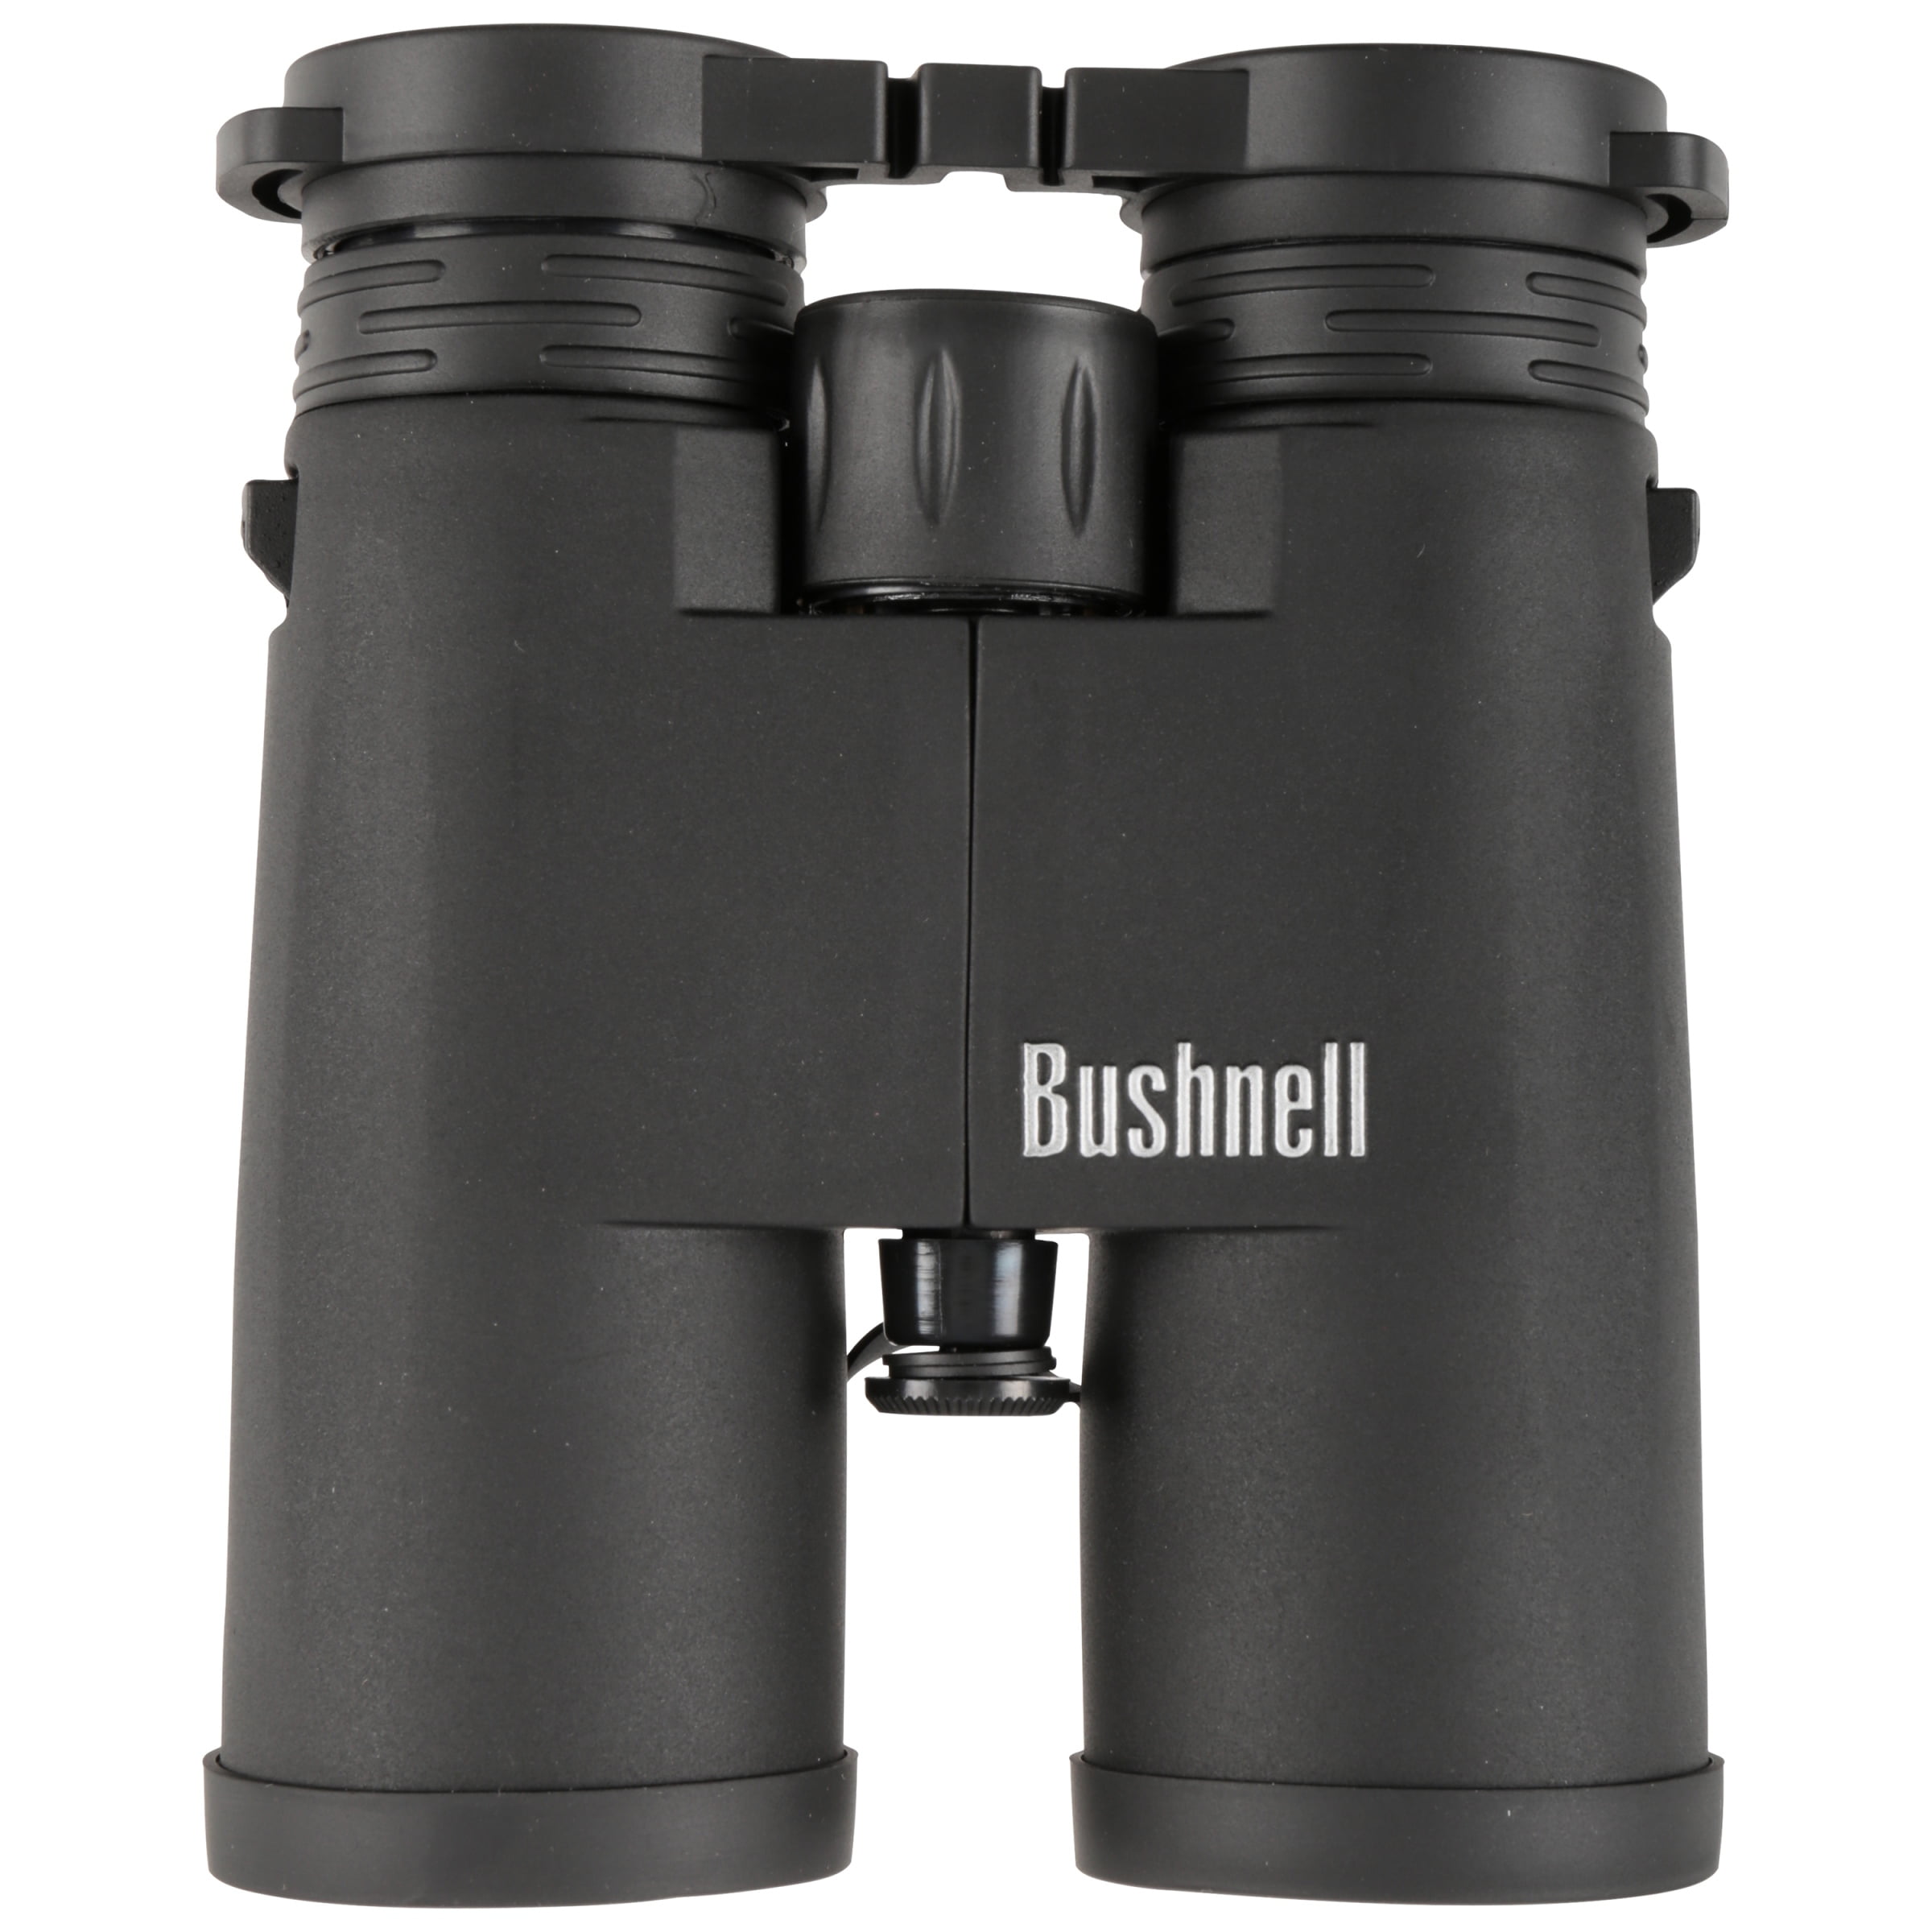 Bushnell Powerview 12 x 42mm Binoculars, Roof Prism